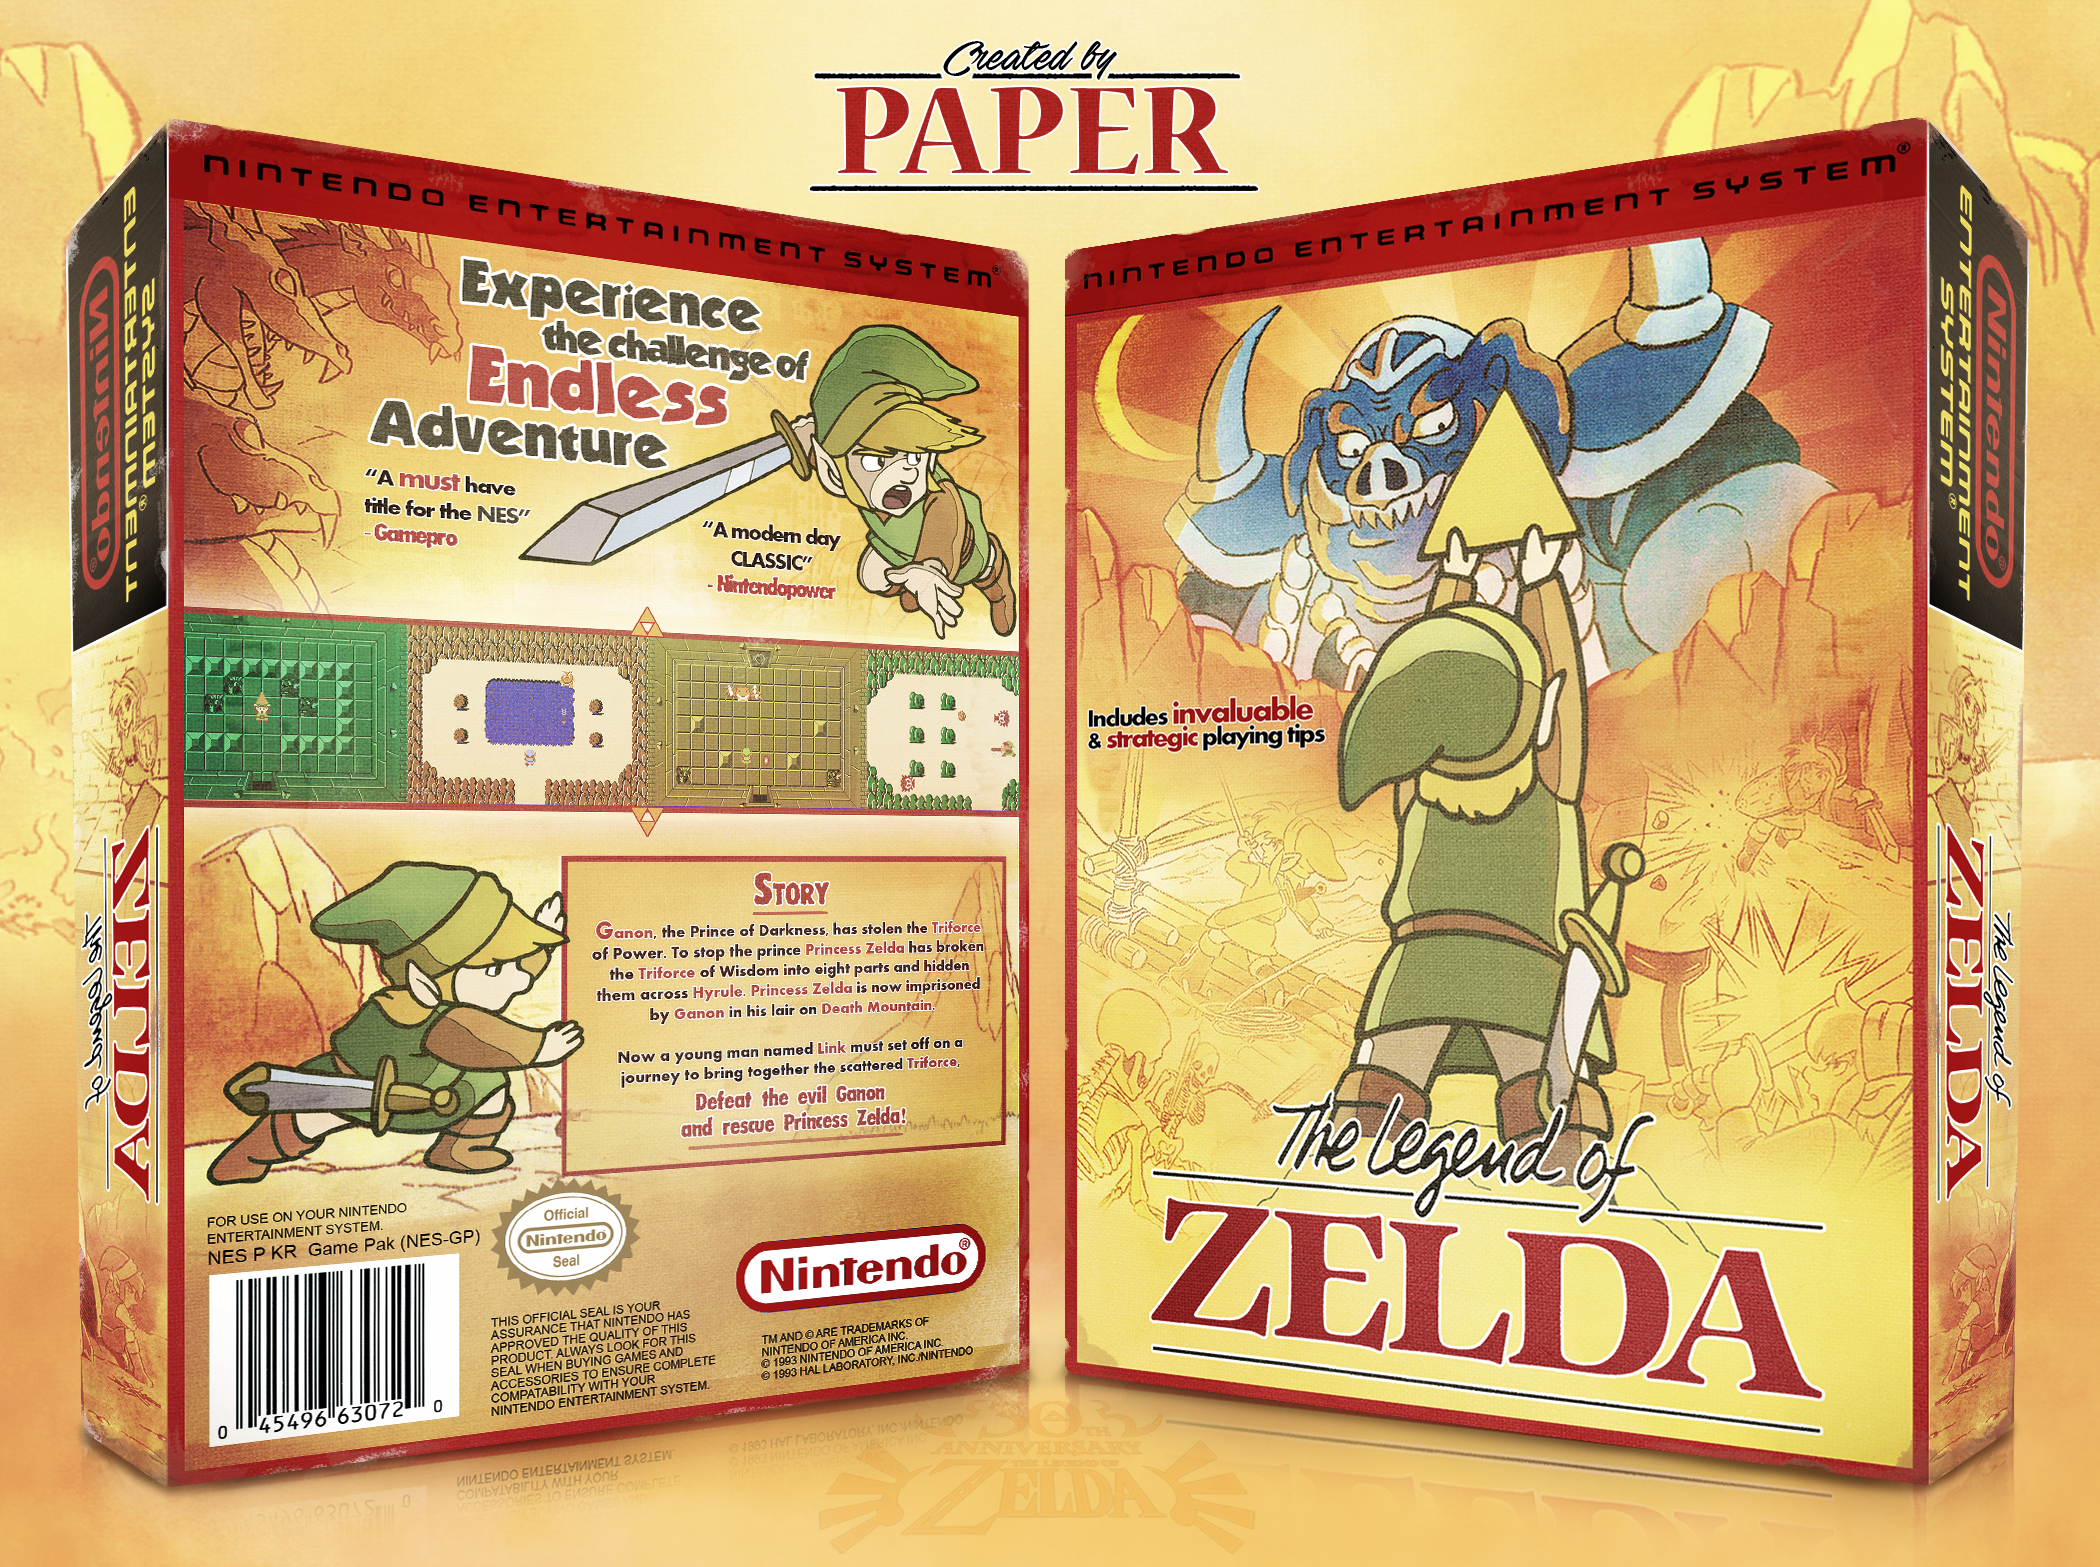 The Legend Of Zelda box cover